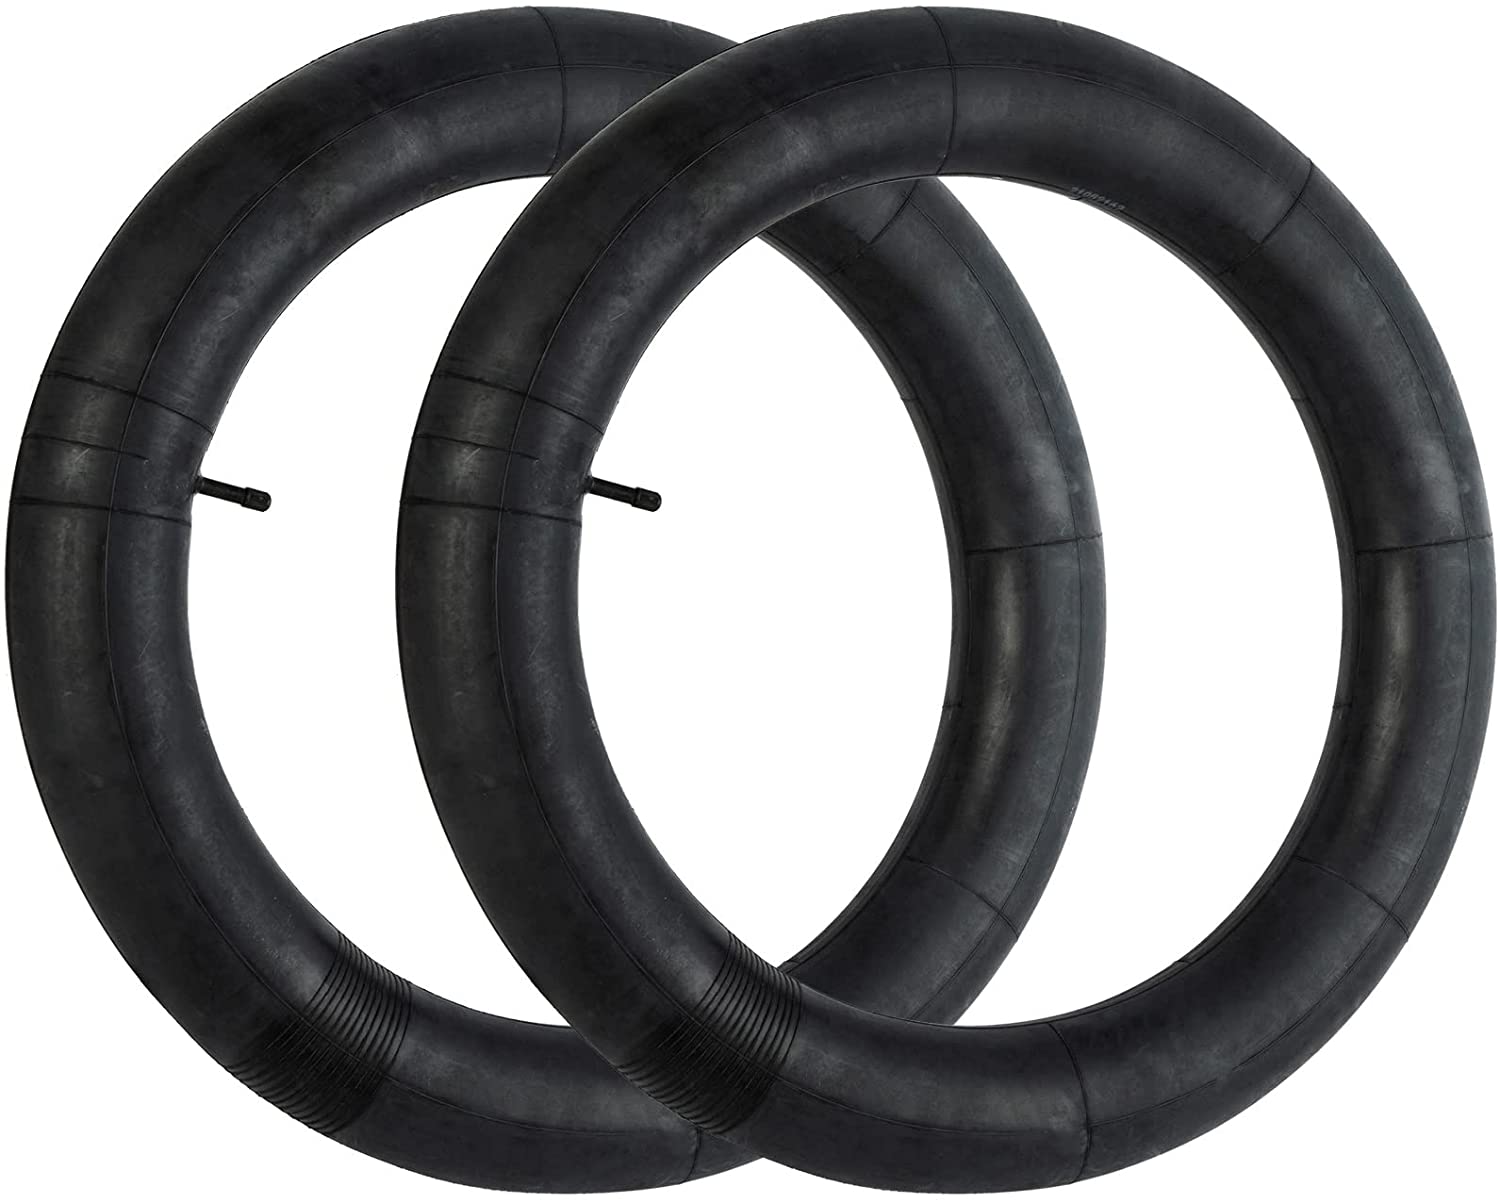 20 x 4 Kenda Tire Tubes (Set of 2)